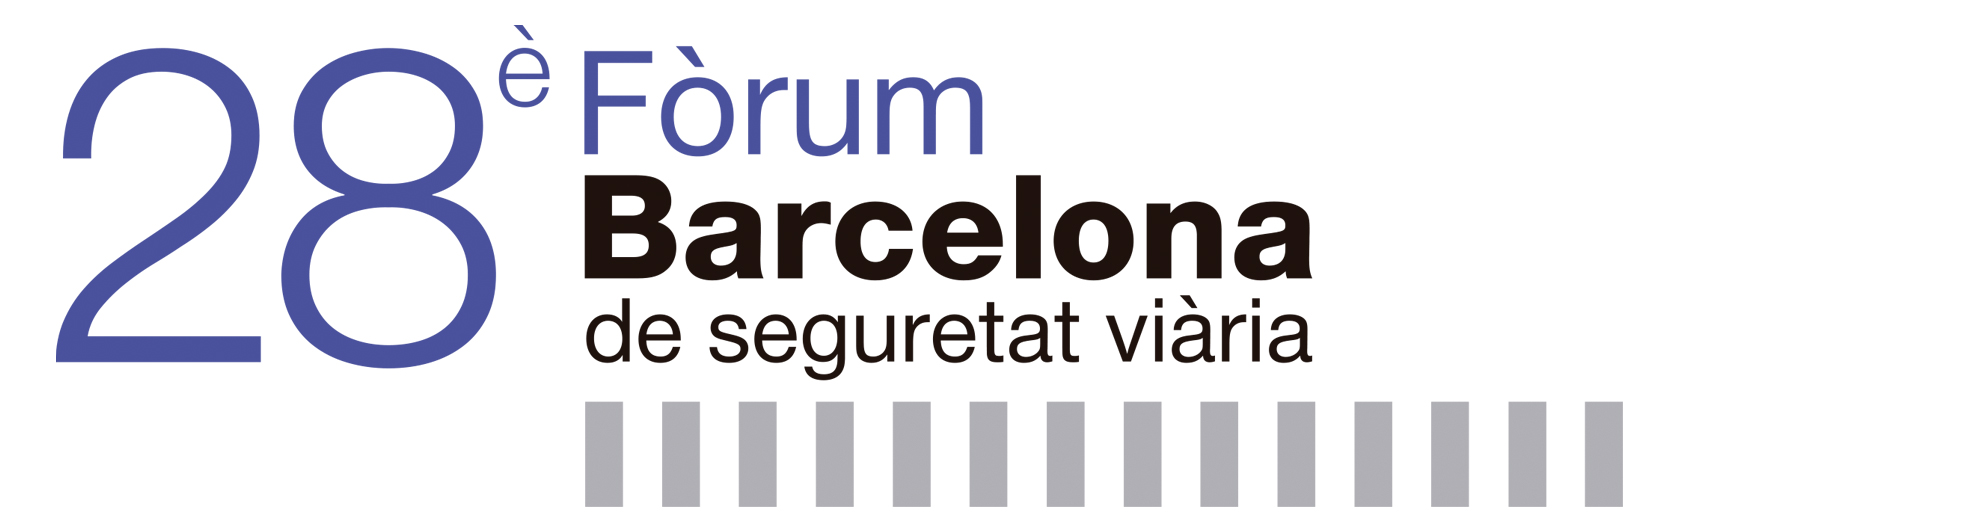 27è Fòrum Barcelona de seguretat viària